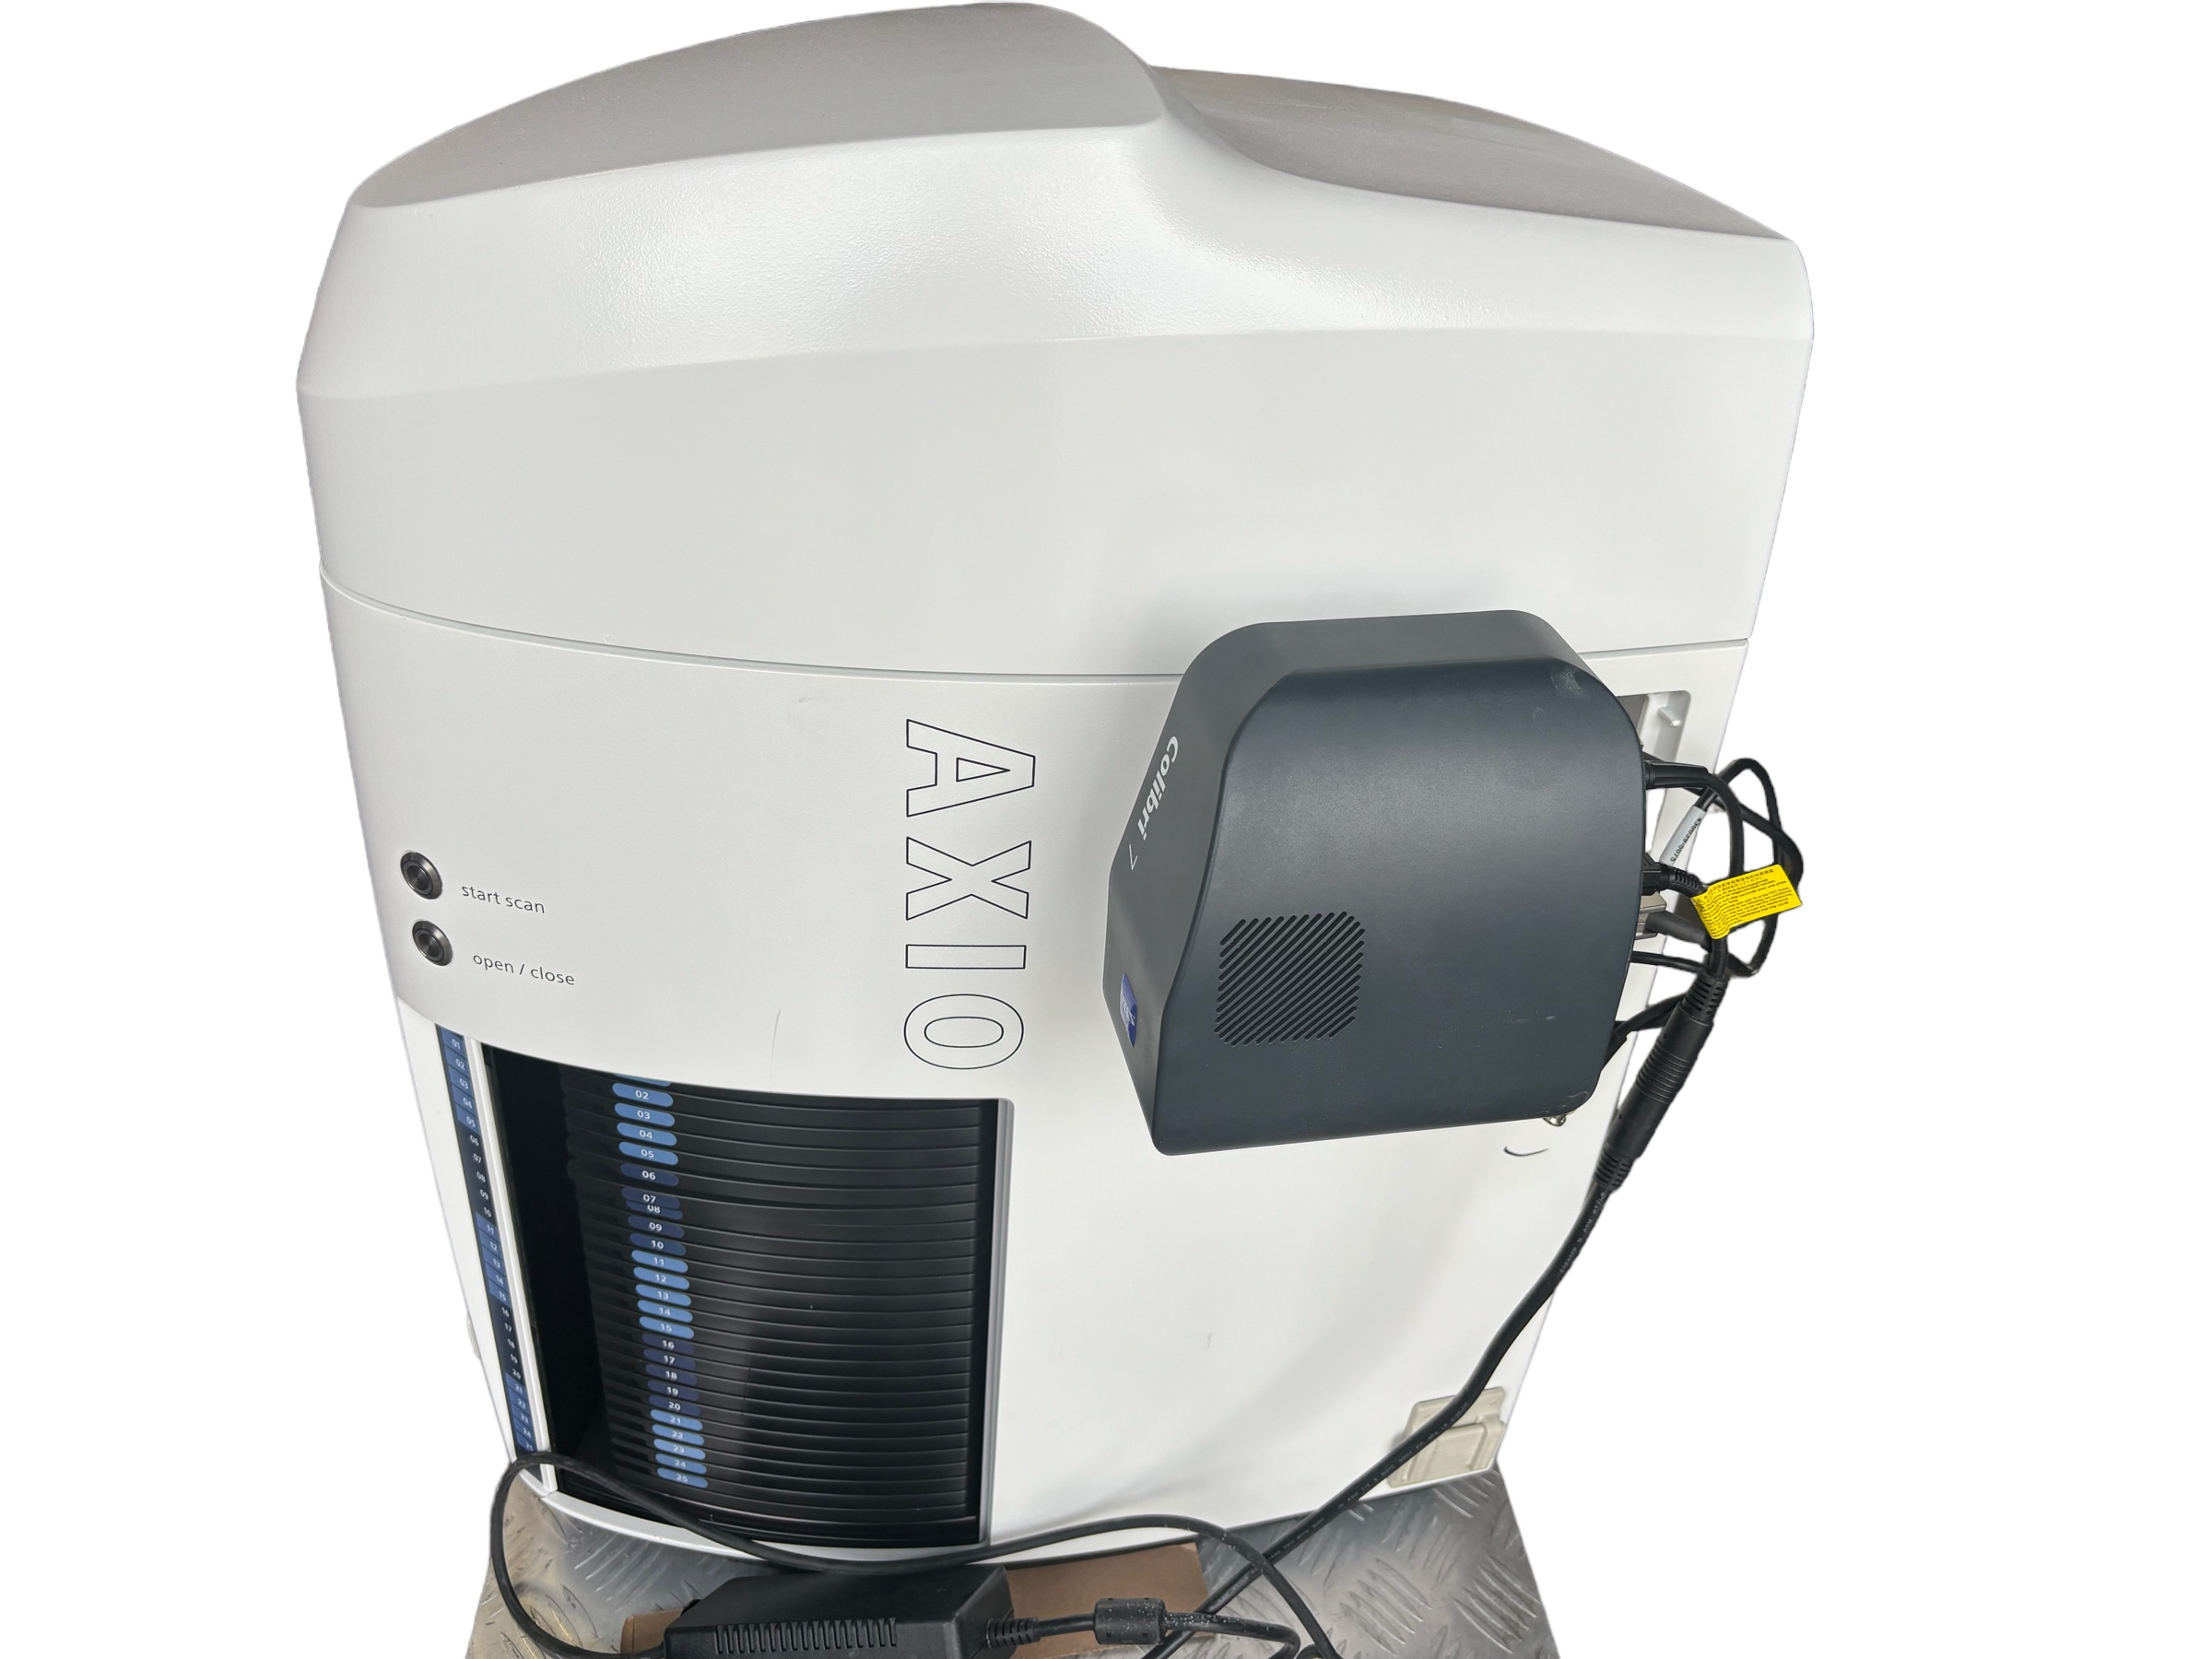 Zeiss AXIO Scan. Z1 430038-9001-000 Precision Microscope MicroImaging w/PC